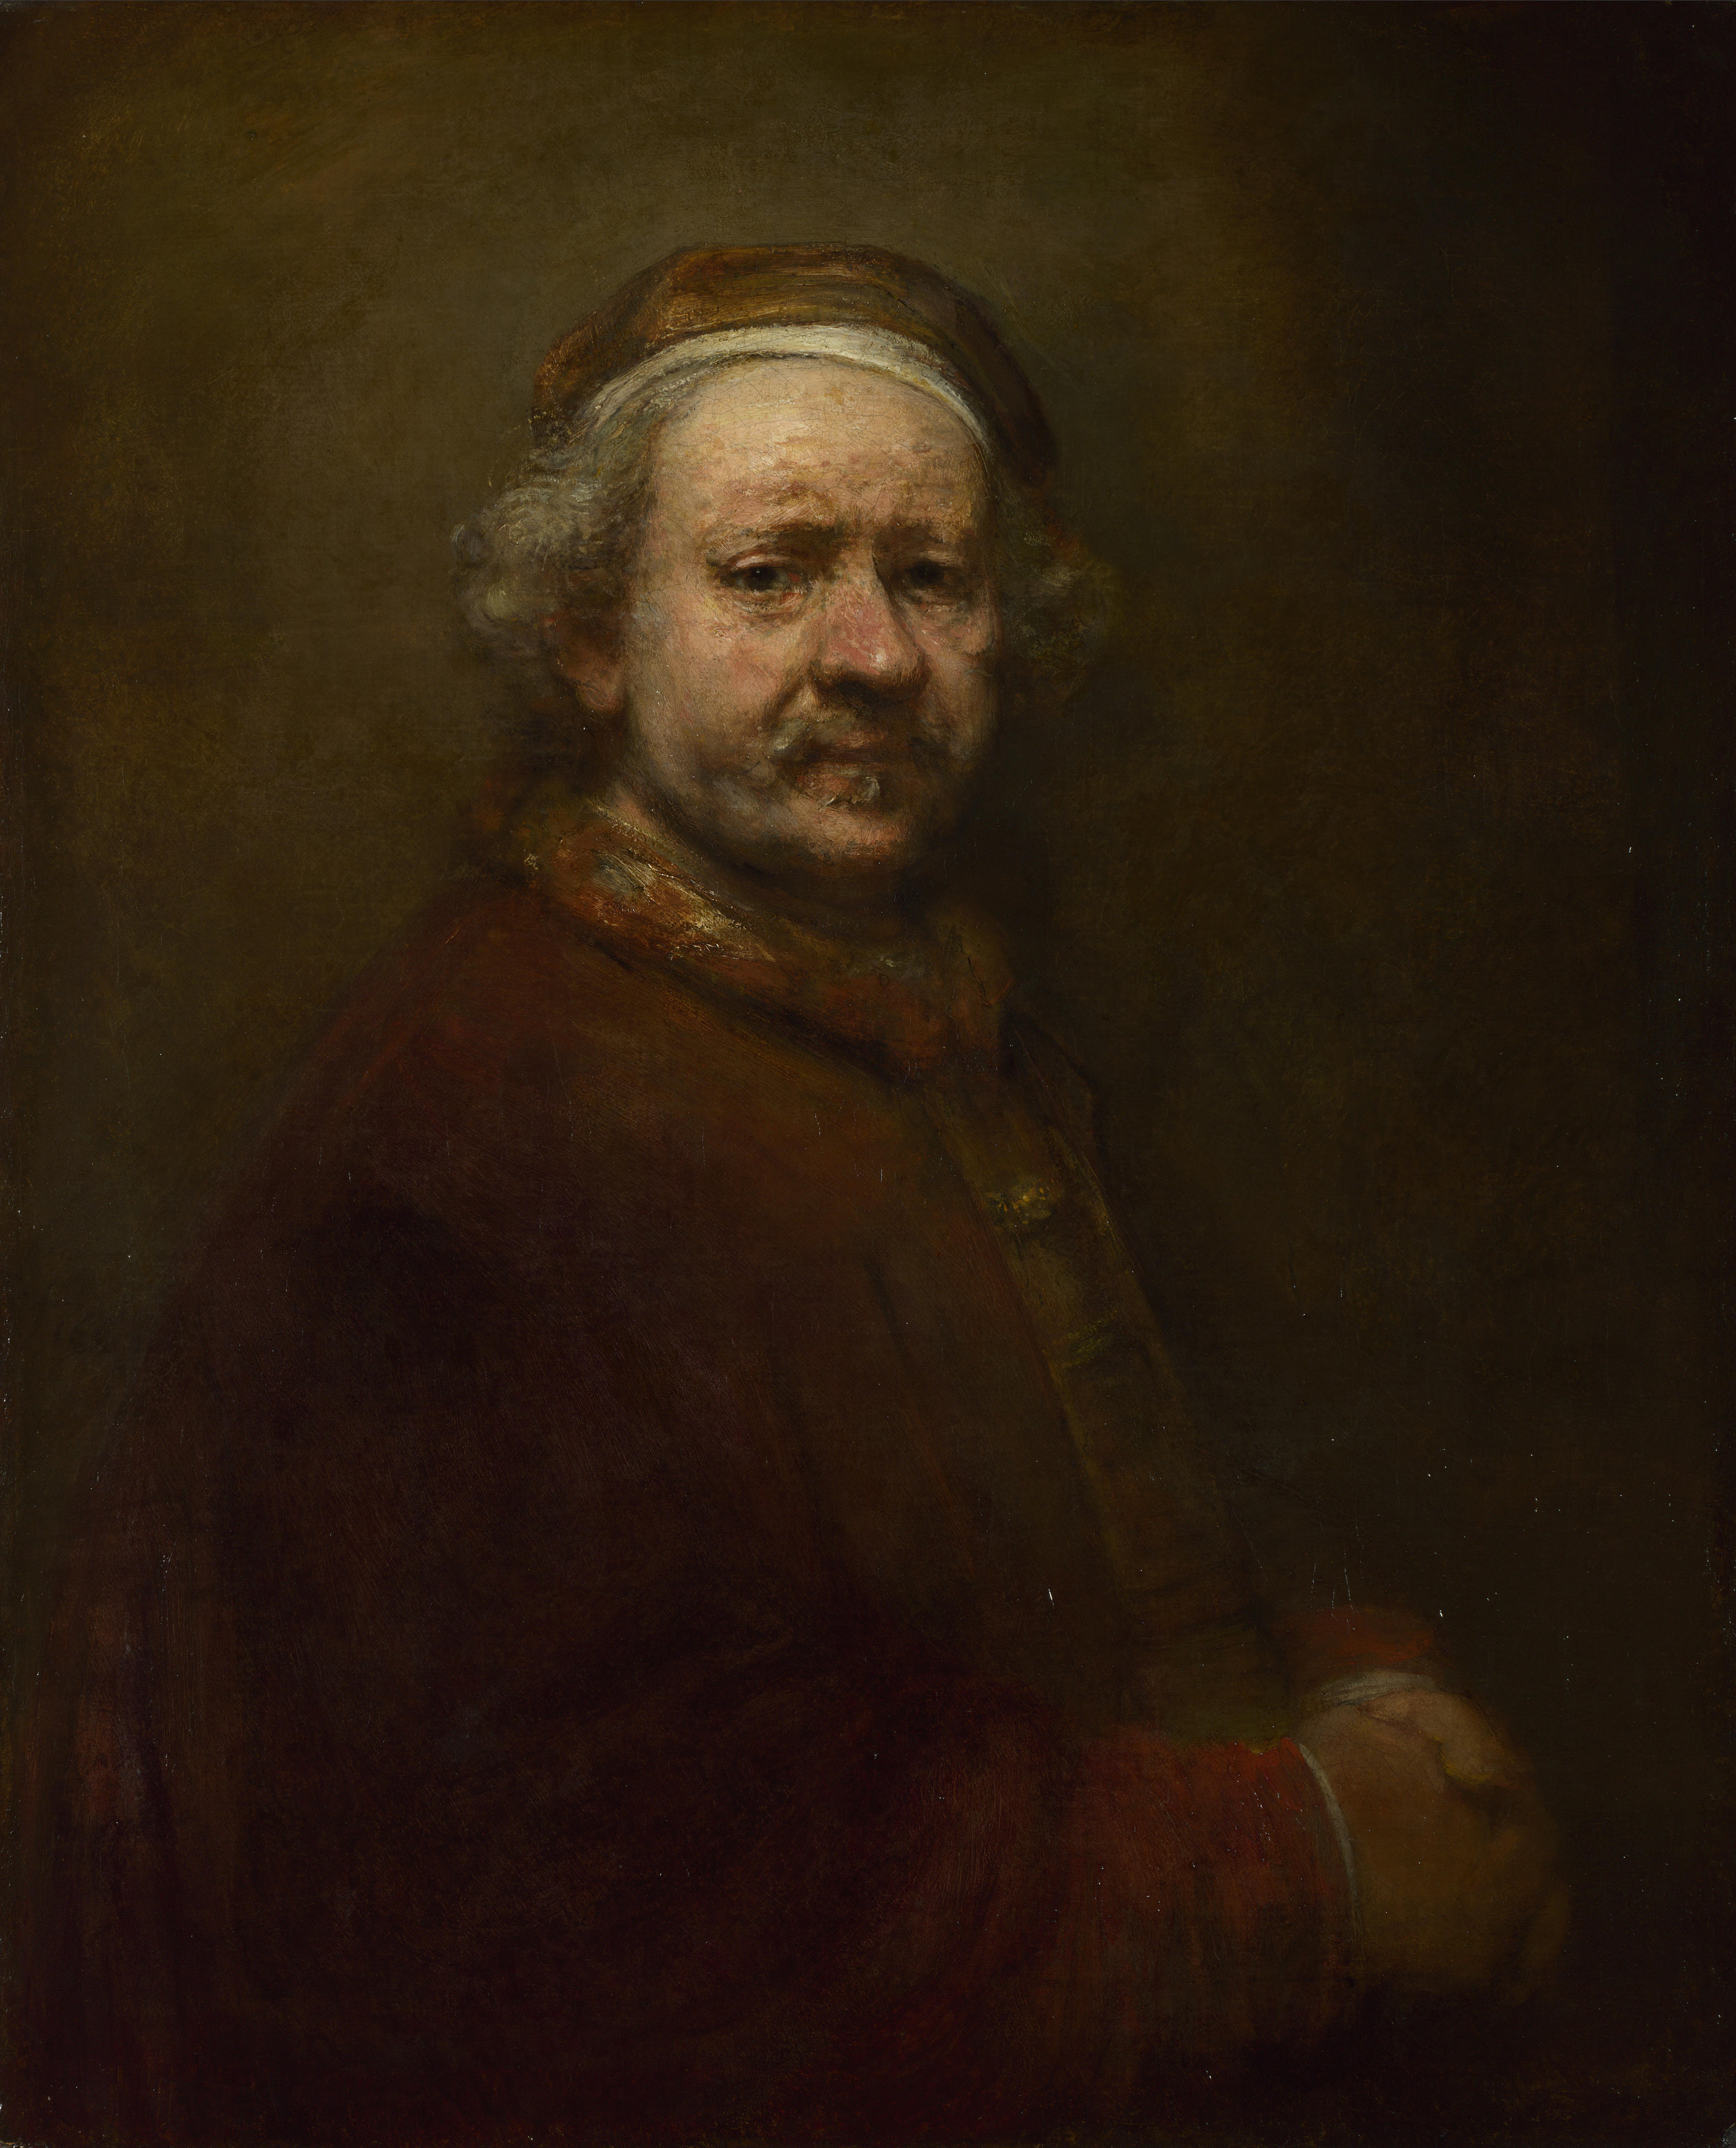 Selbstporträt by Rembrandt van Rijn - 1669 - 86 x 70,5 cm National Gallery